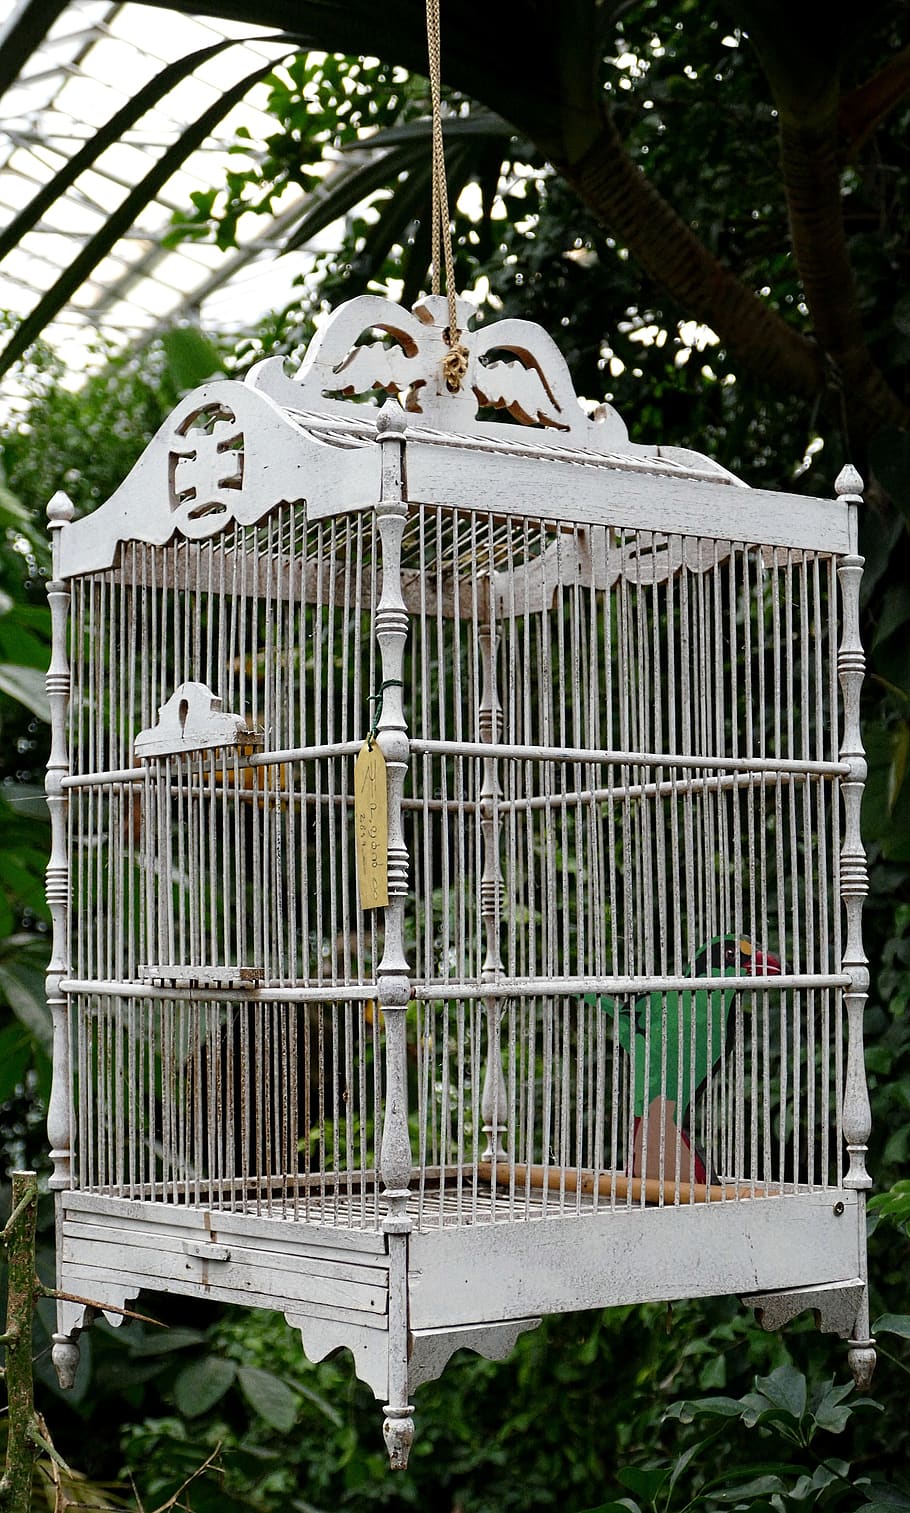 cage, boxed, bars, wood, bird, caged, birds, sad, bird cage, caught